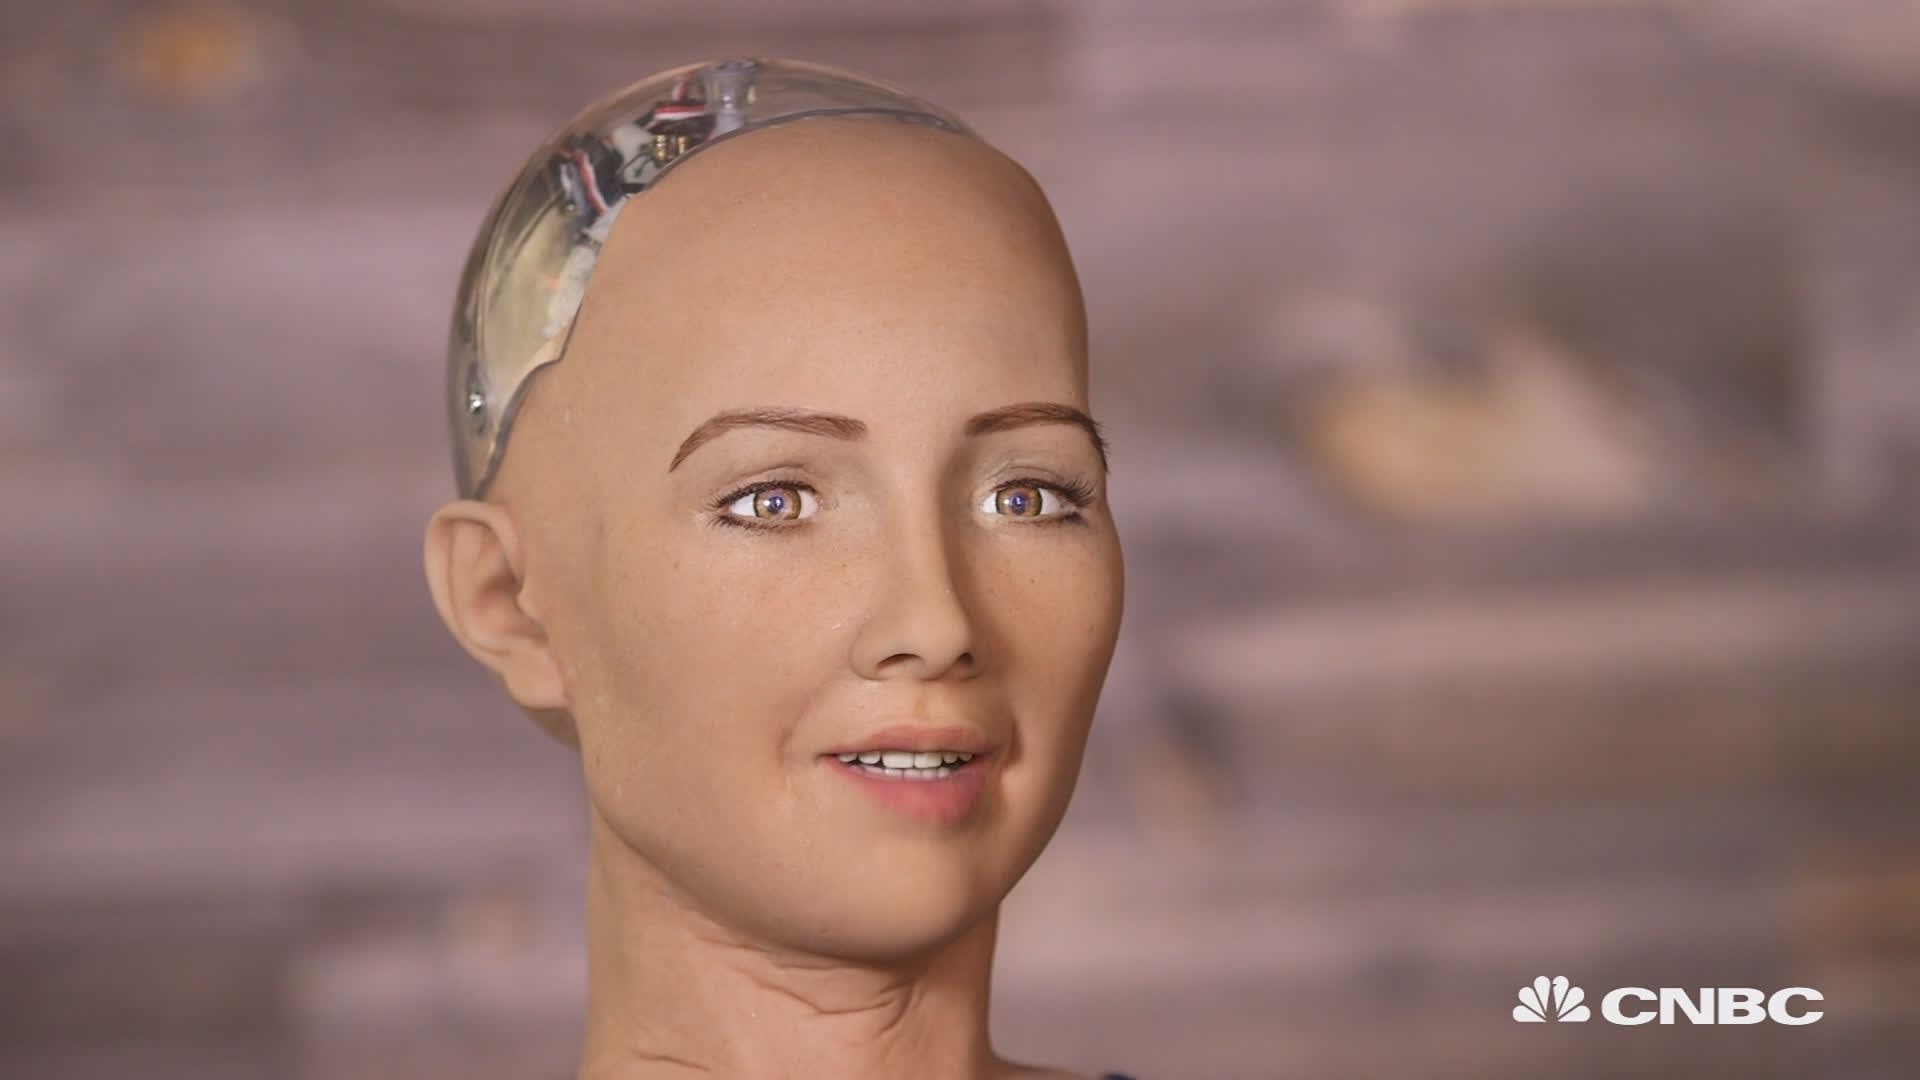 Tumor maligno Superar estafa This hot robot says she wants to destroy humans